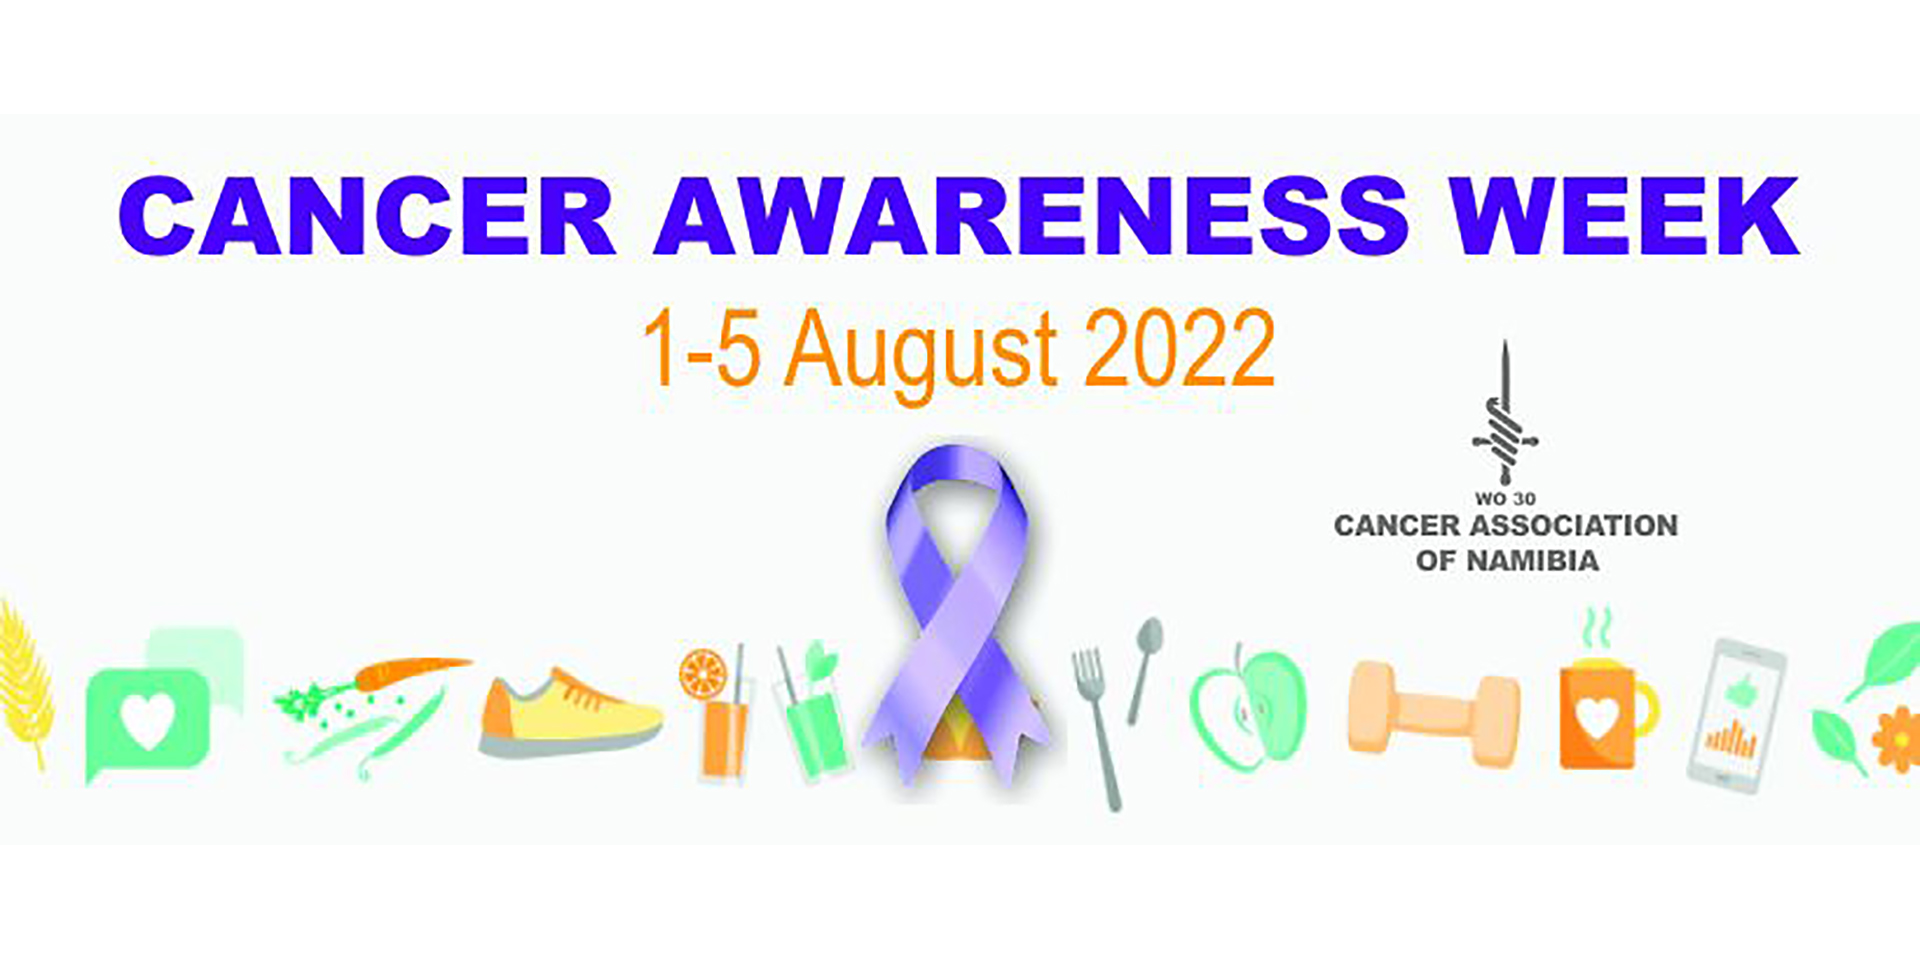 Cancer Awareness Week, Namibia, Poster 